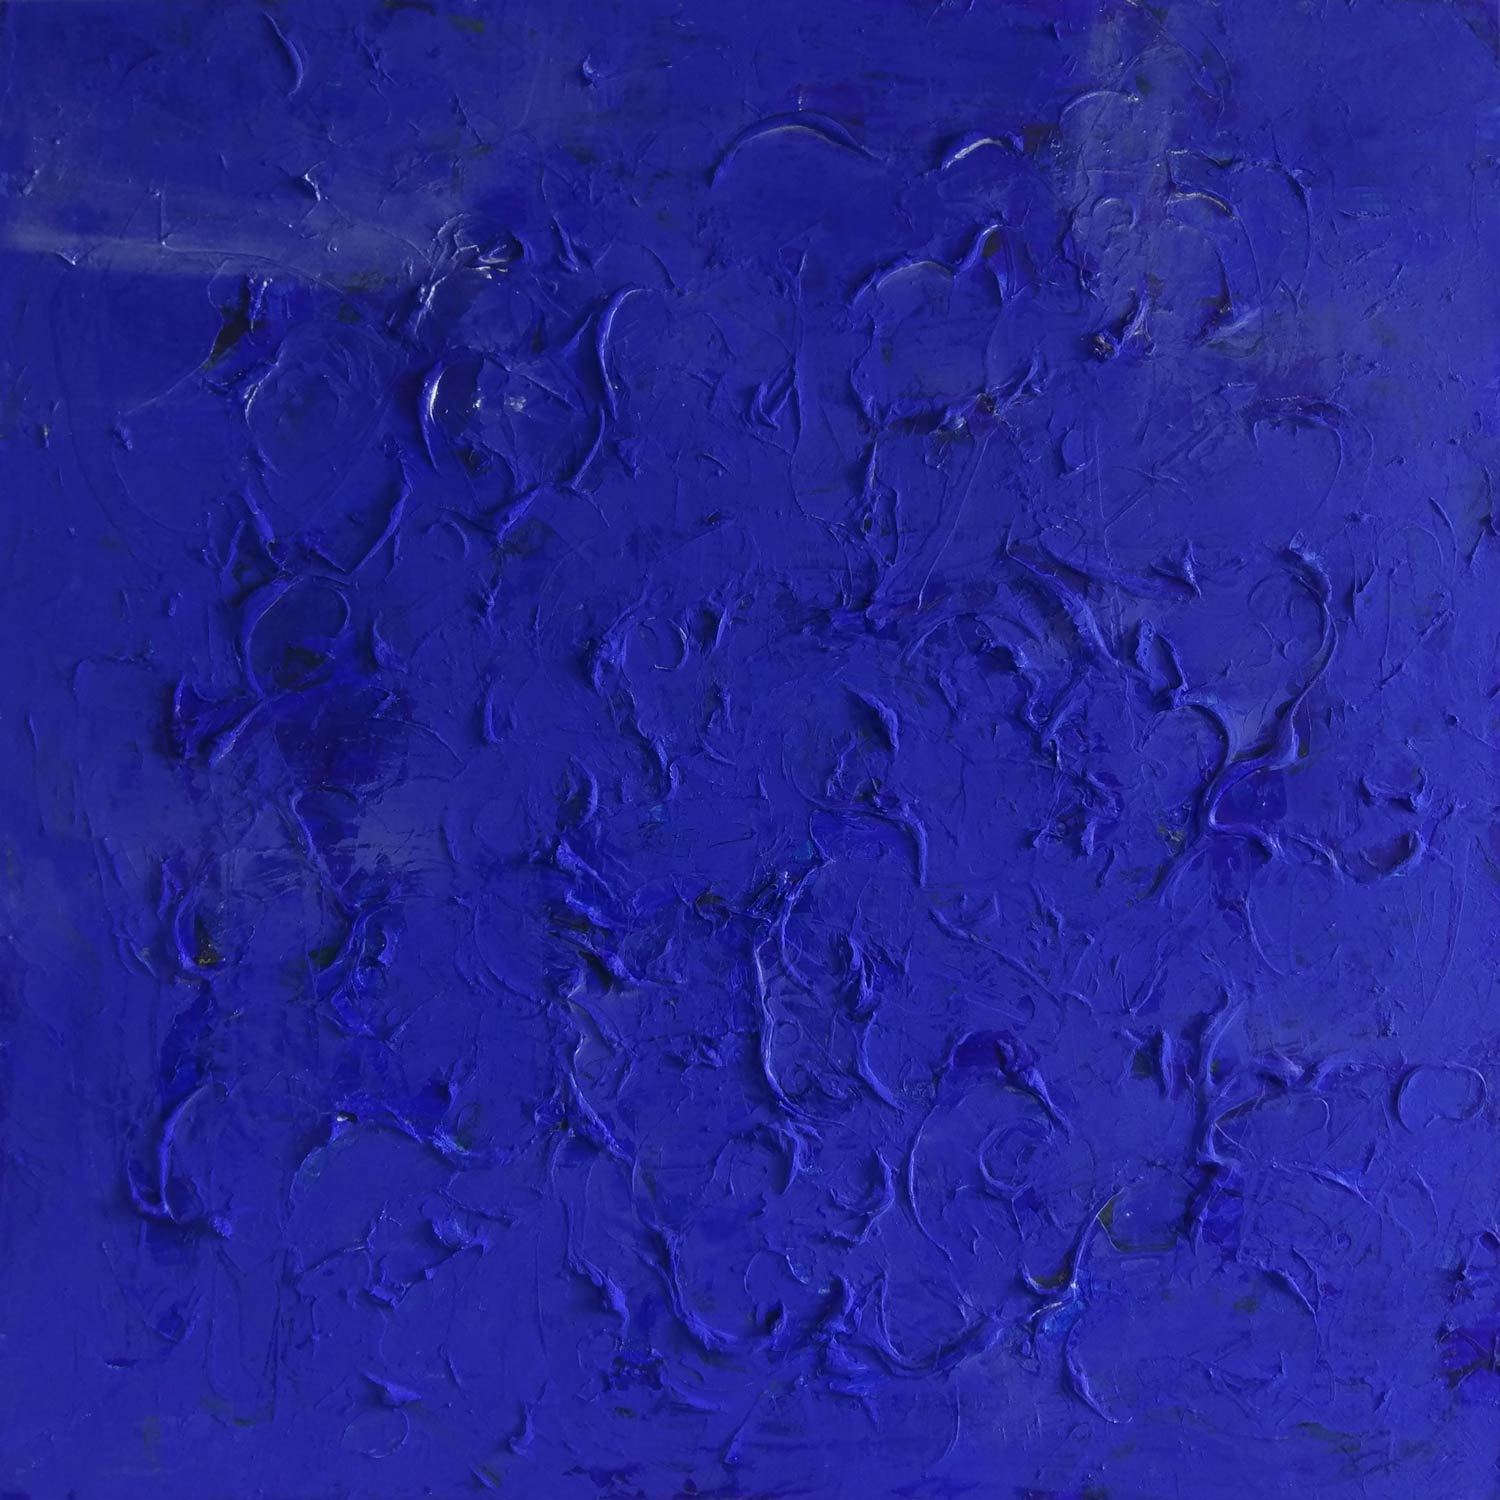 Buy painting online Singapore Blue Blooded Raina Kim Li Singapore Exquisite Art